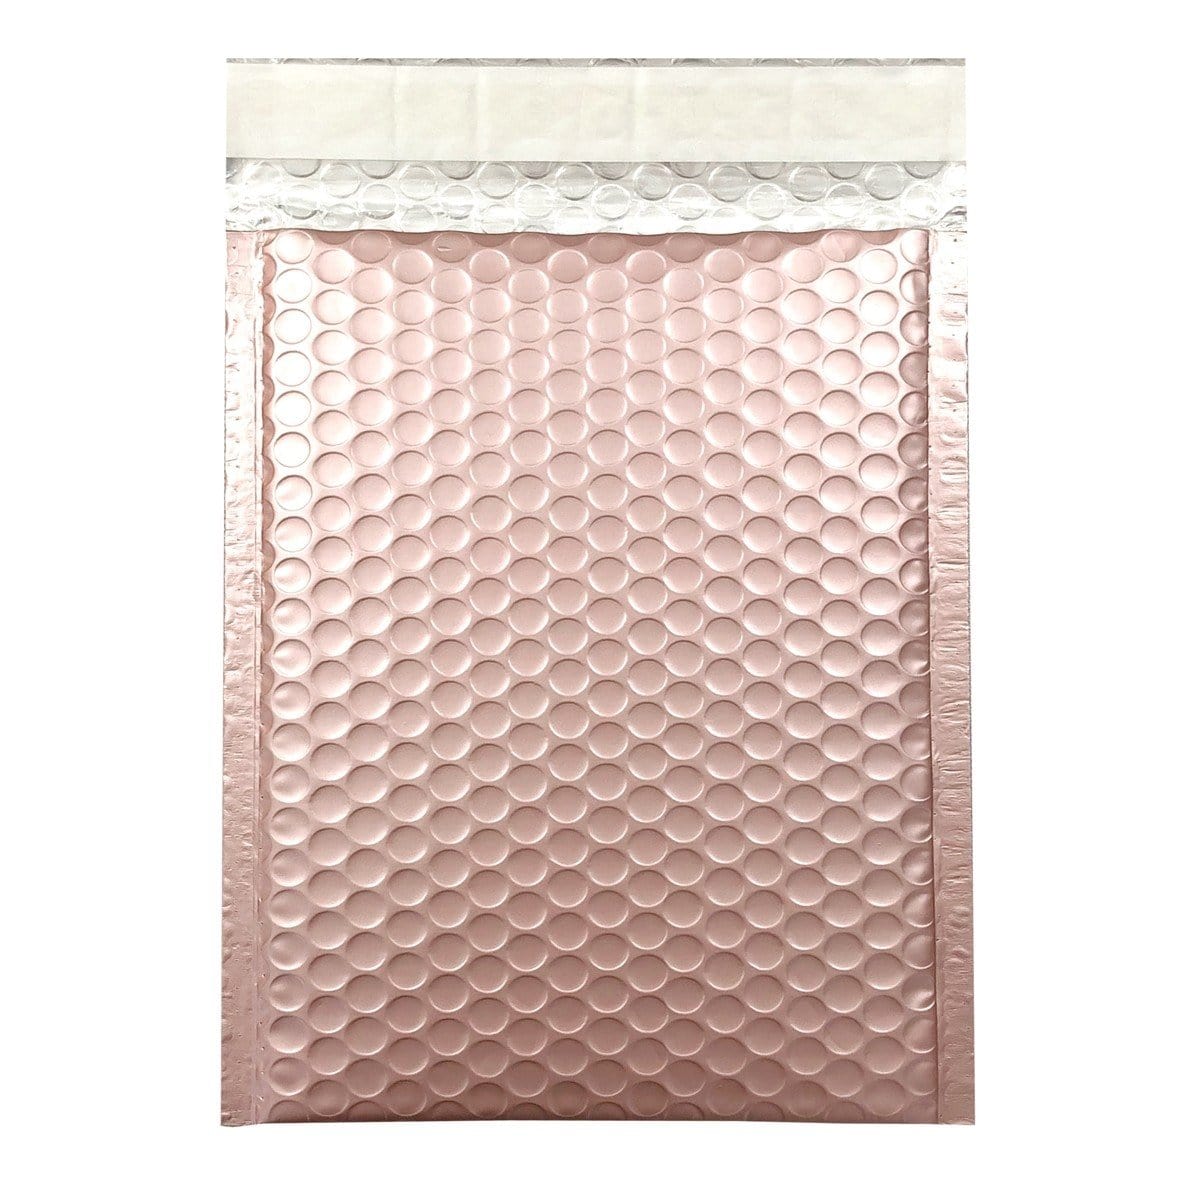 270 x 365mm Metallic Rose Gold Blush Padded Bubble Envelopes [Qty 100] - All Colour Envelopes